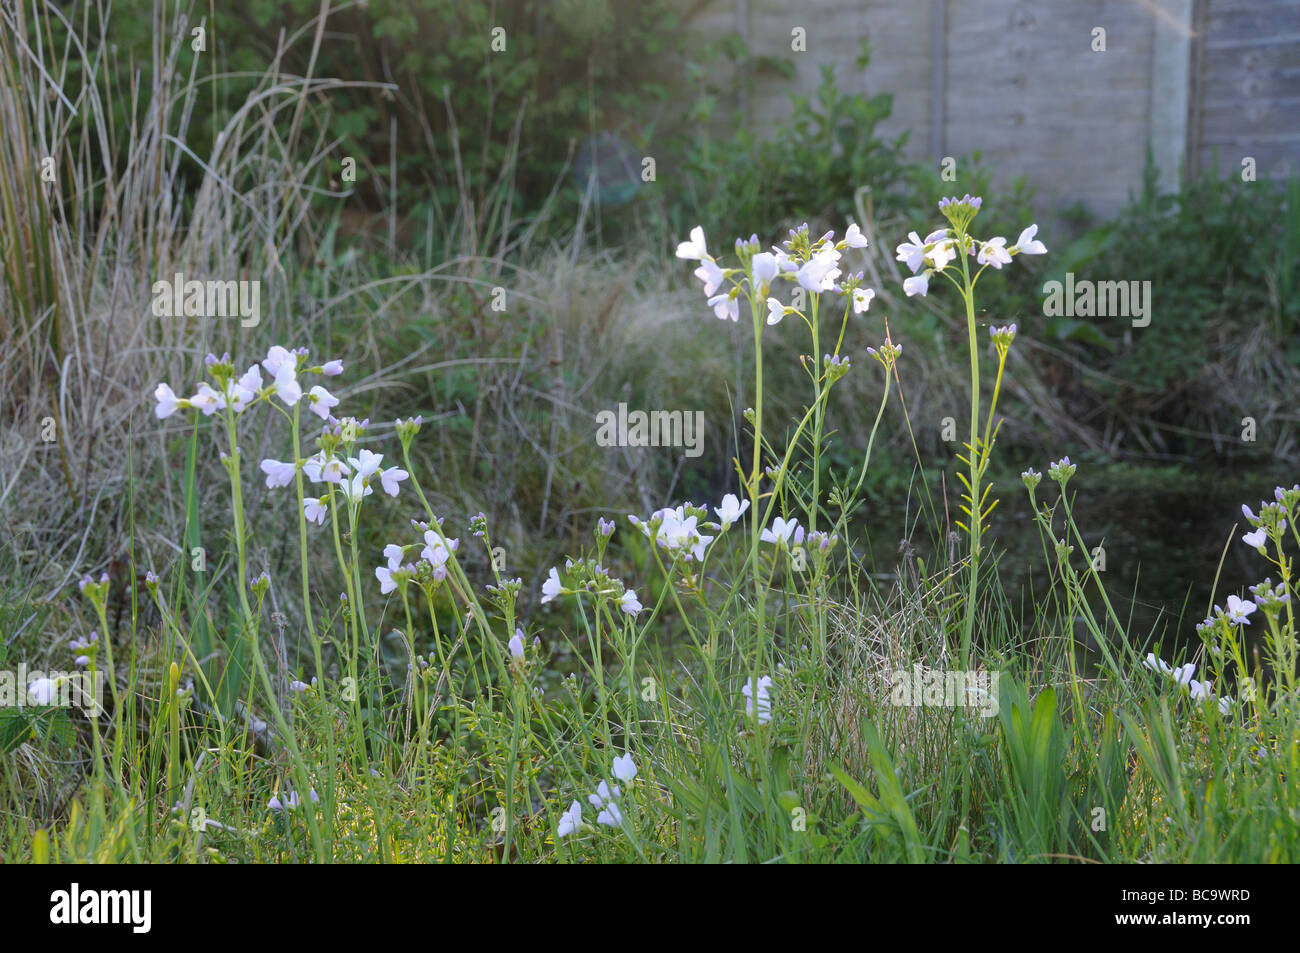 Lady s Smock or Cuckoo Flower cardamine pratensis in flower growing in wildlife area of garden Uk April Stock Photo